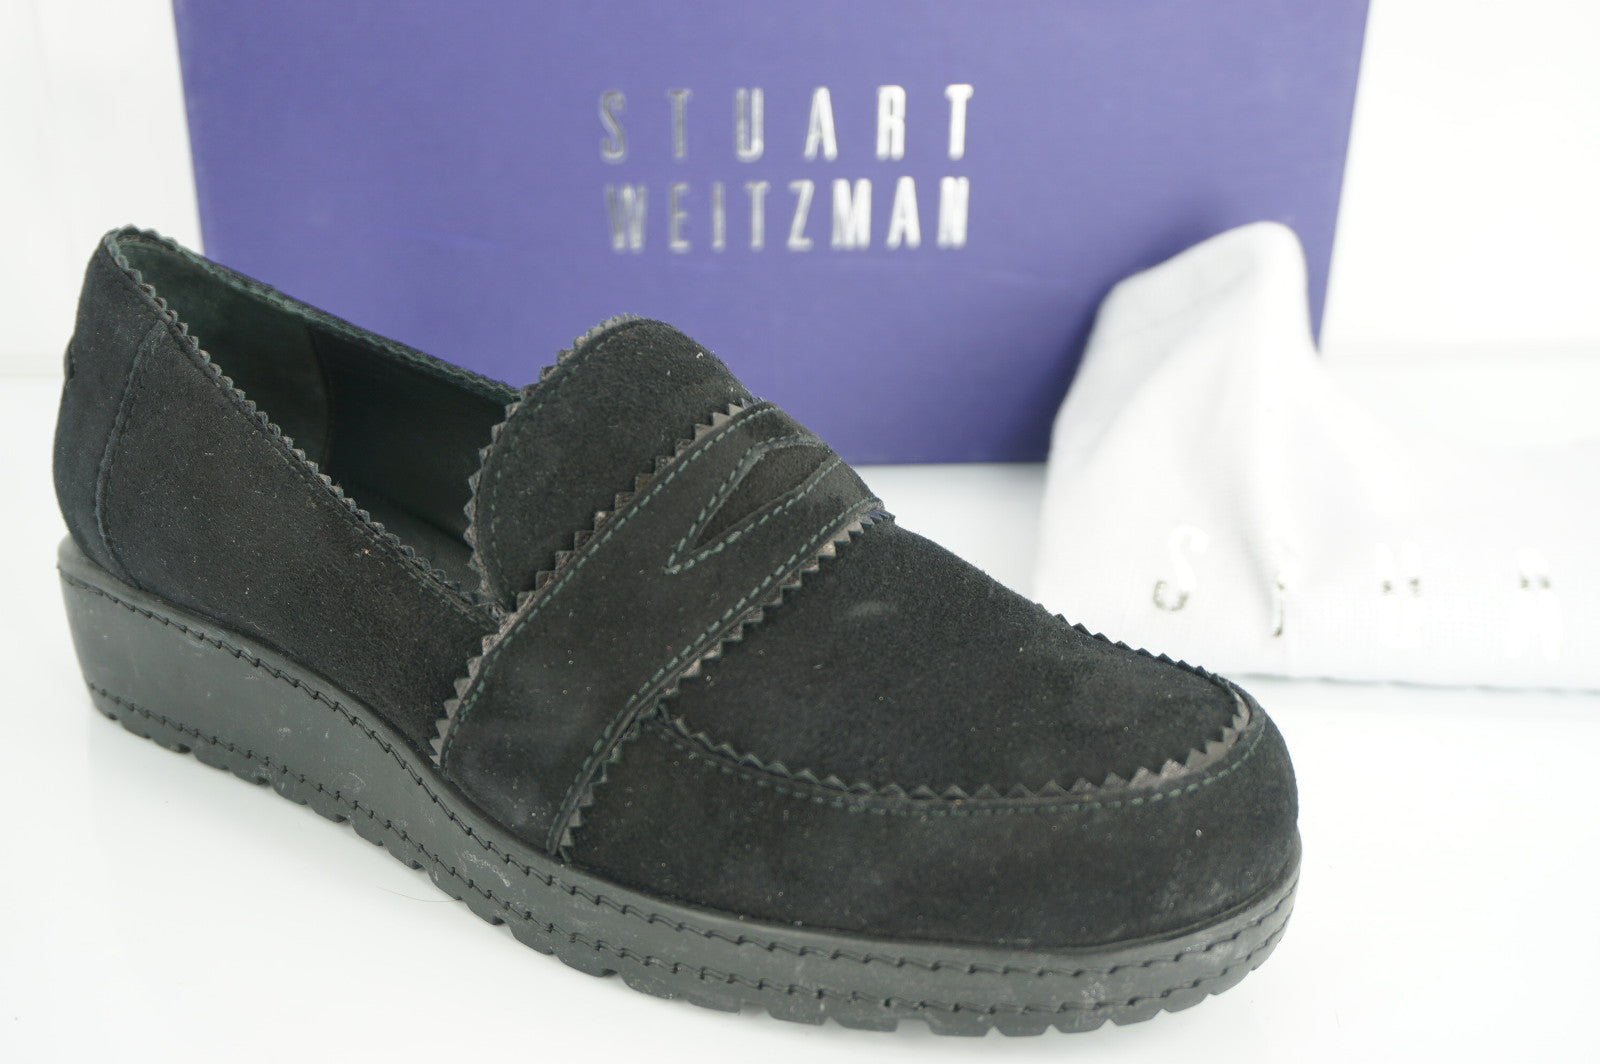 Size 7 Stuart Weitzman Schooldays Black Suede Platform Penny Loafers NIB $399